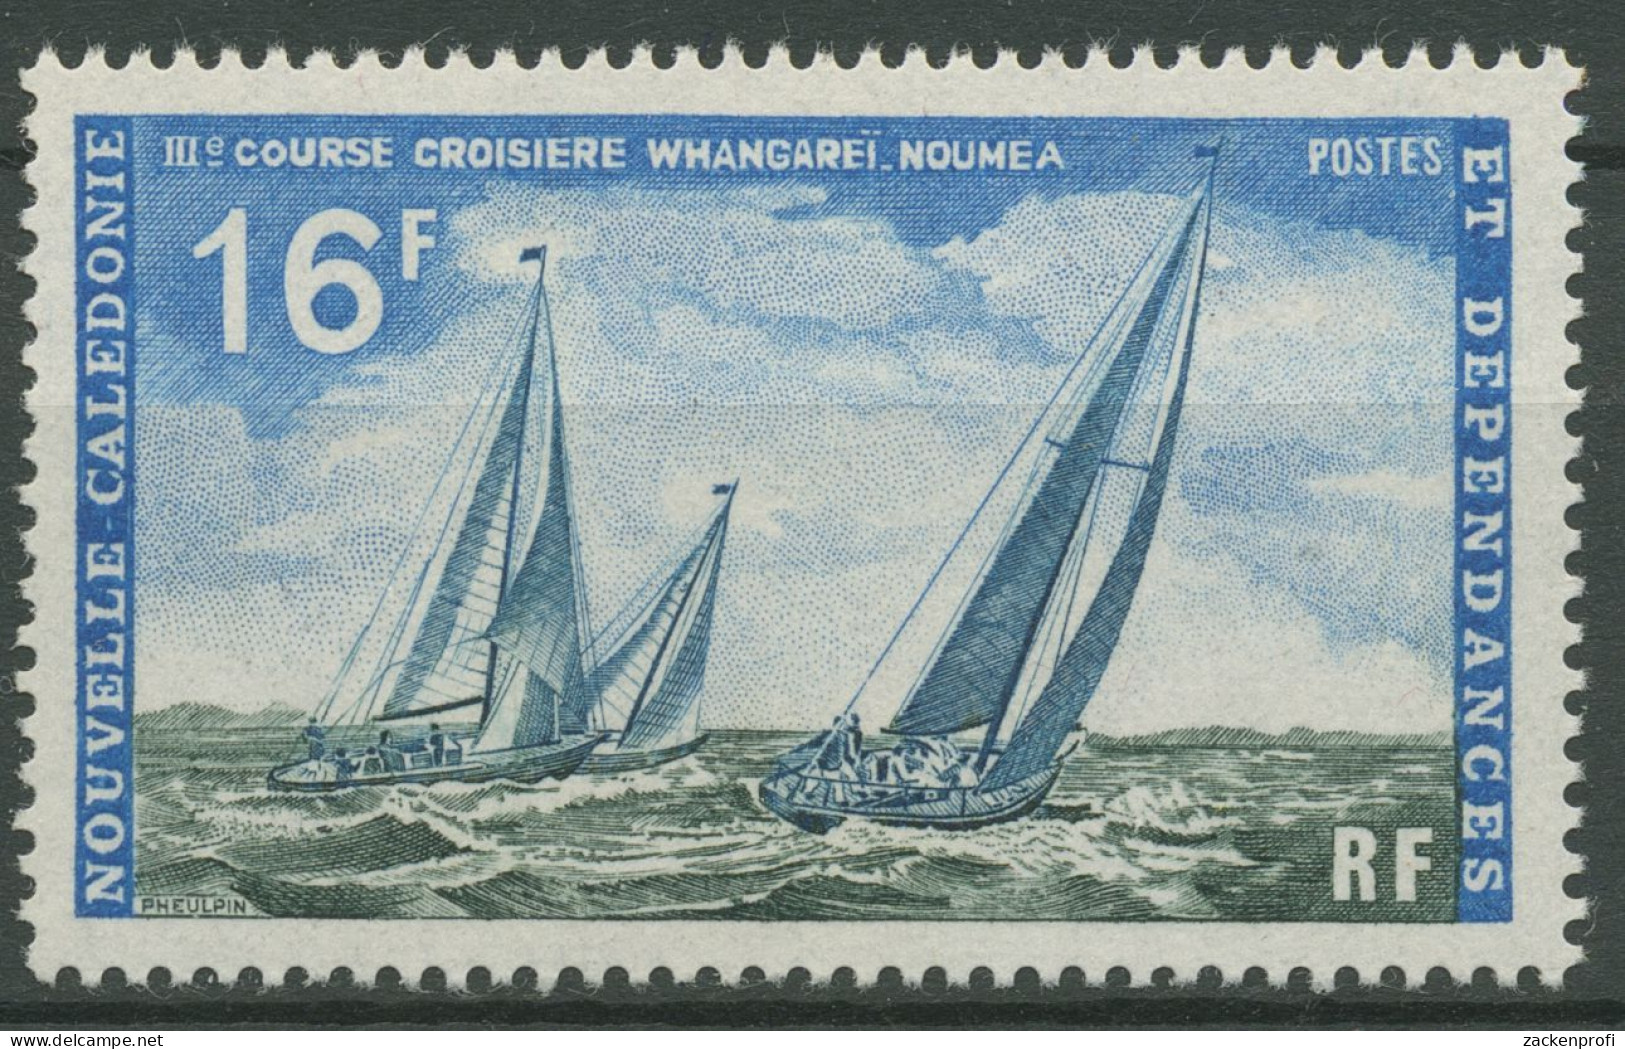 Neukaledonien 1971 Hochseeregatta Whangarei-Nouméa 500 Postfrisch - Nuovi